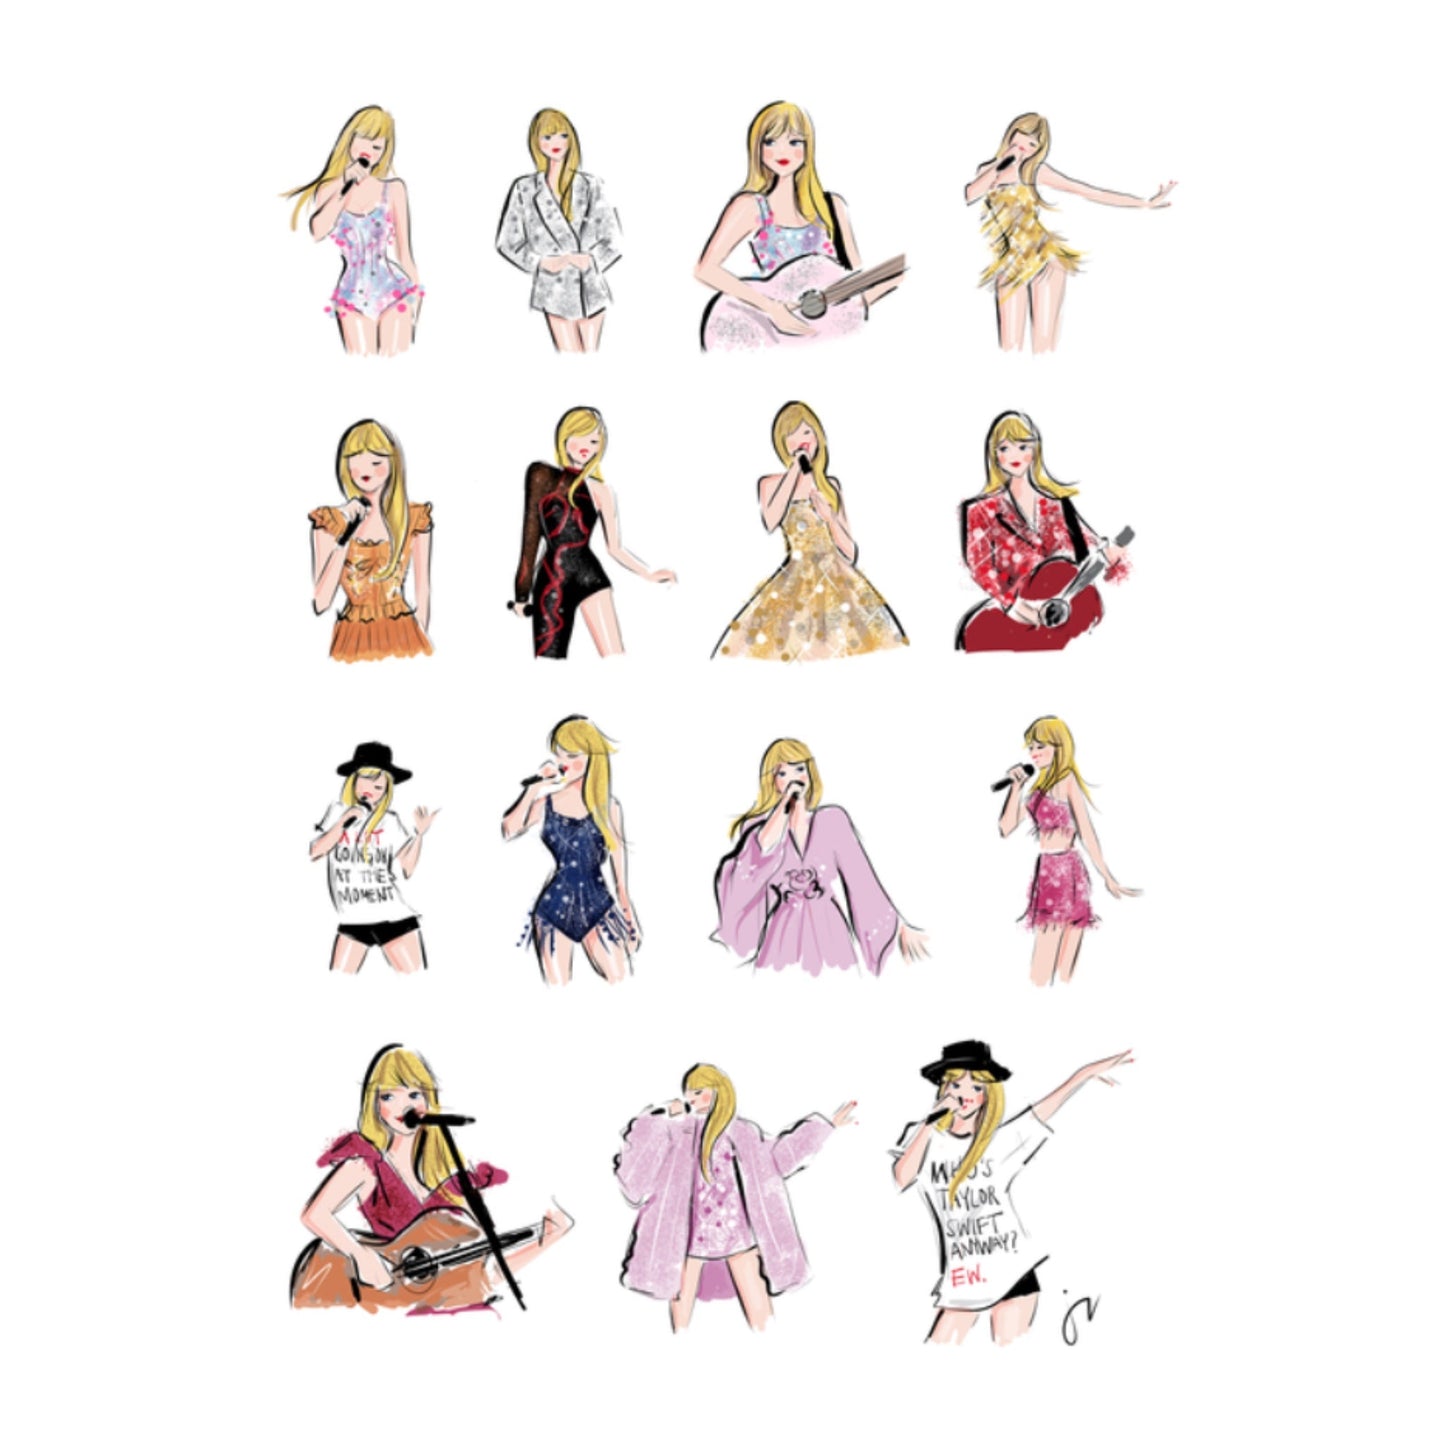 Taylor Swift Eras Tour Outfits Print